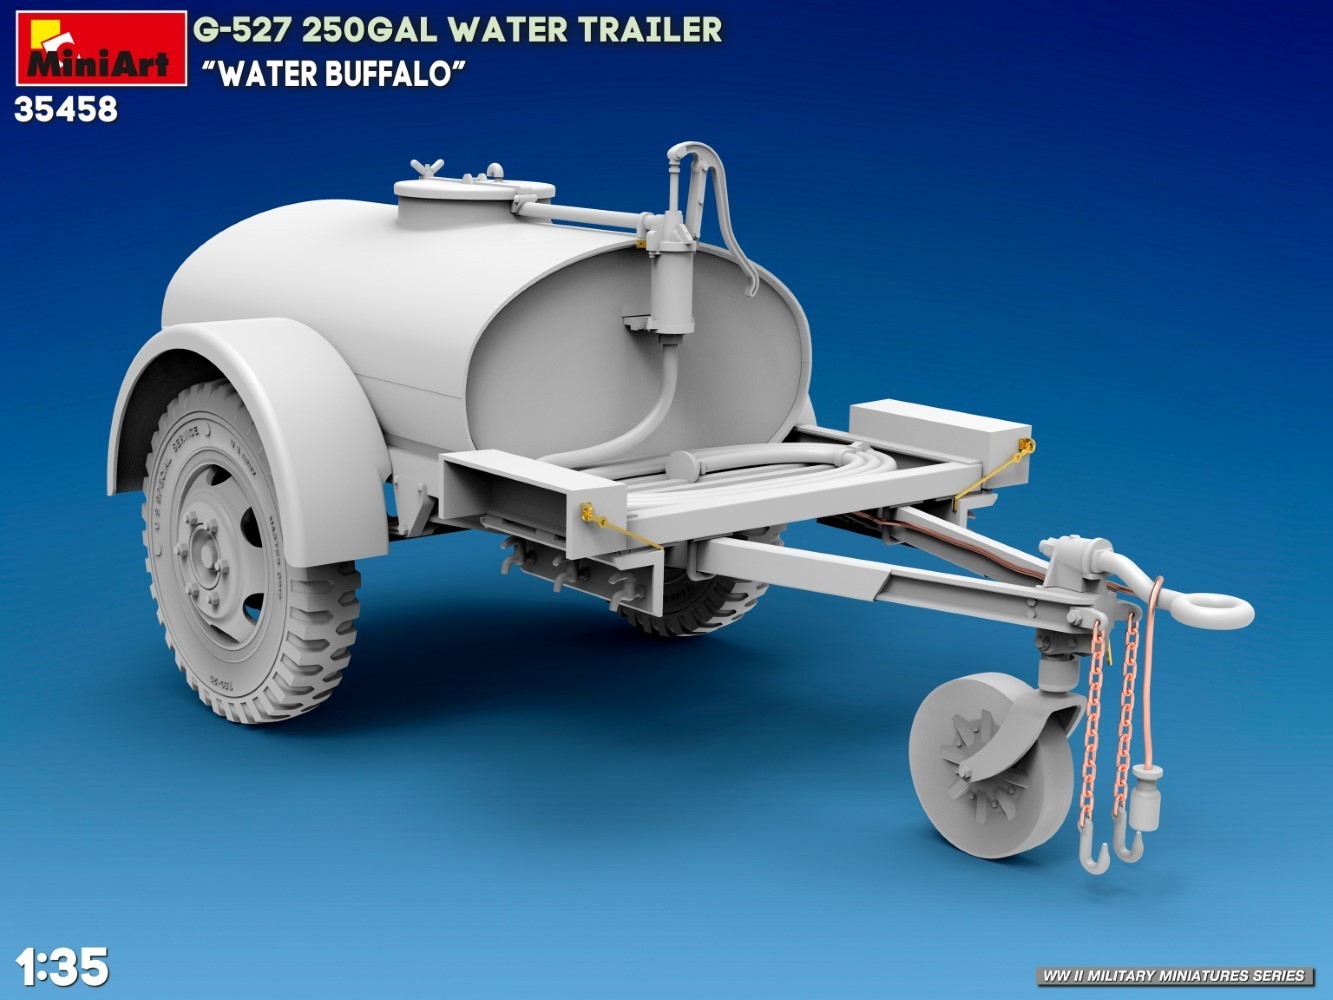 MiniArt G-527 250GAL Water Trailer “Water Buffalo” CAD-2